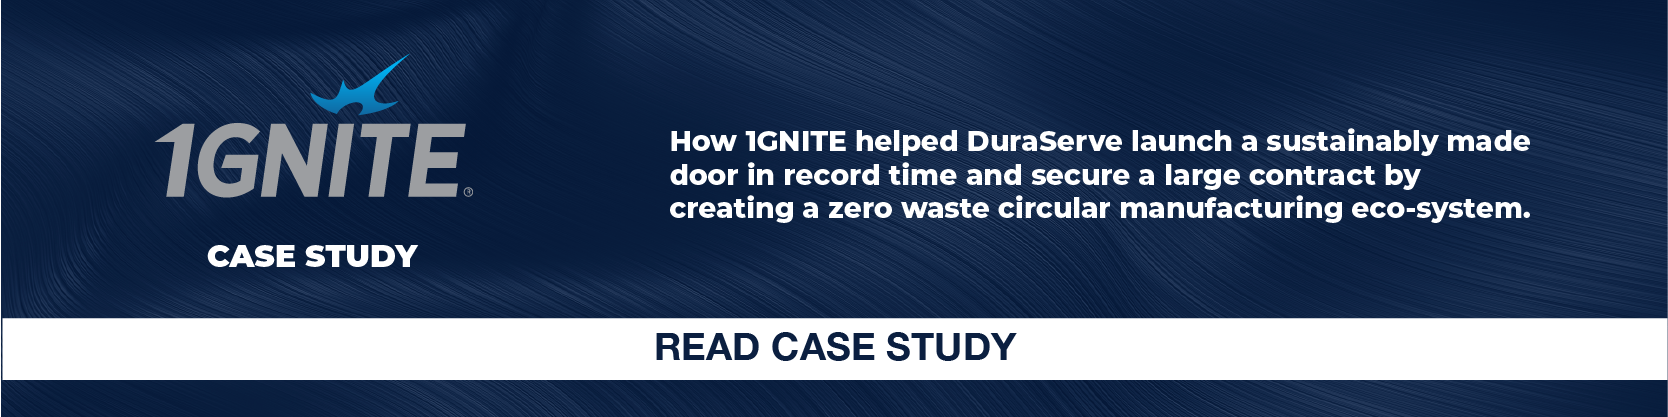 1GNITE_Case Study_Circularity_ DuraServe